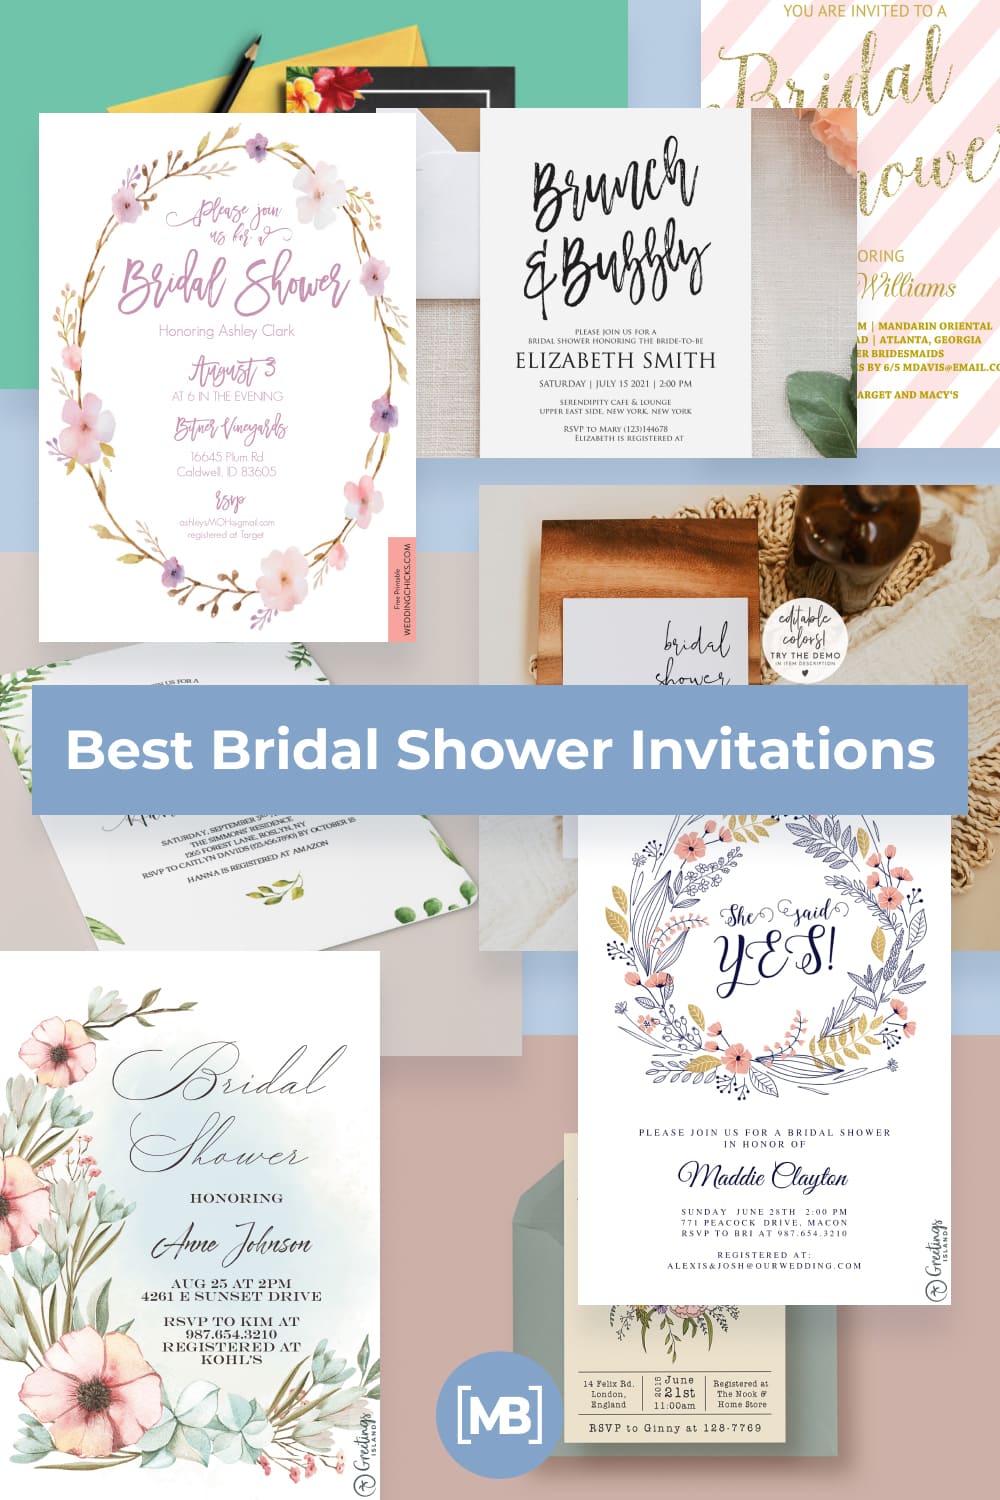 Best Bridal Shower Invitations Pinterest.